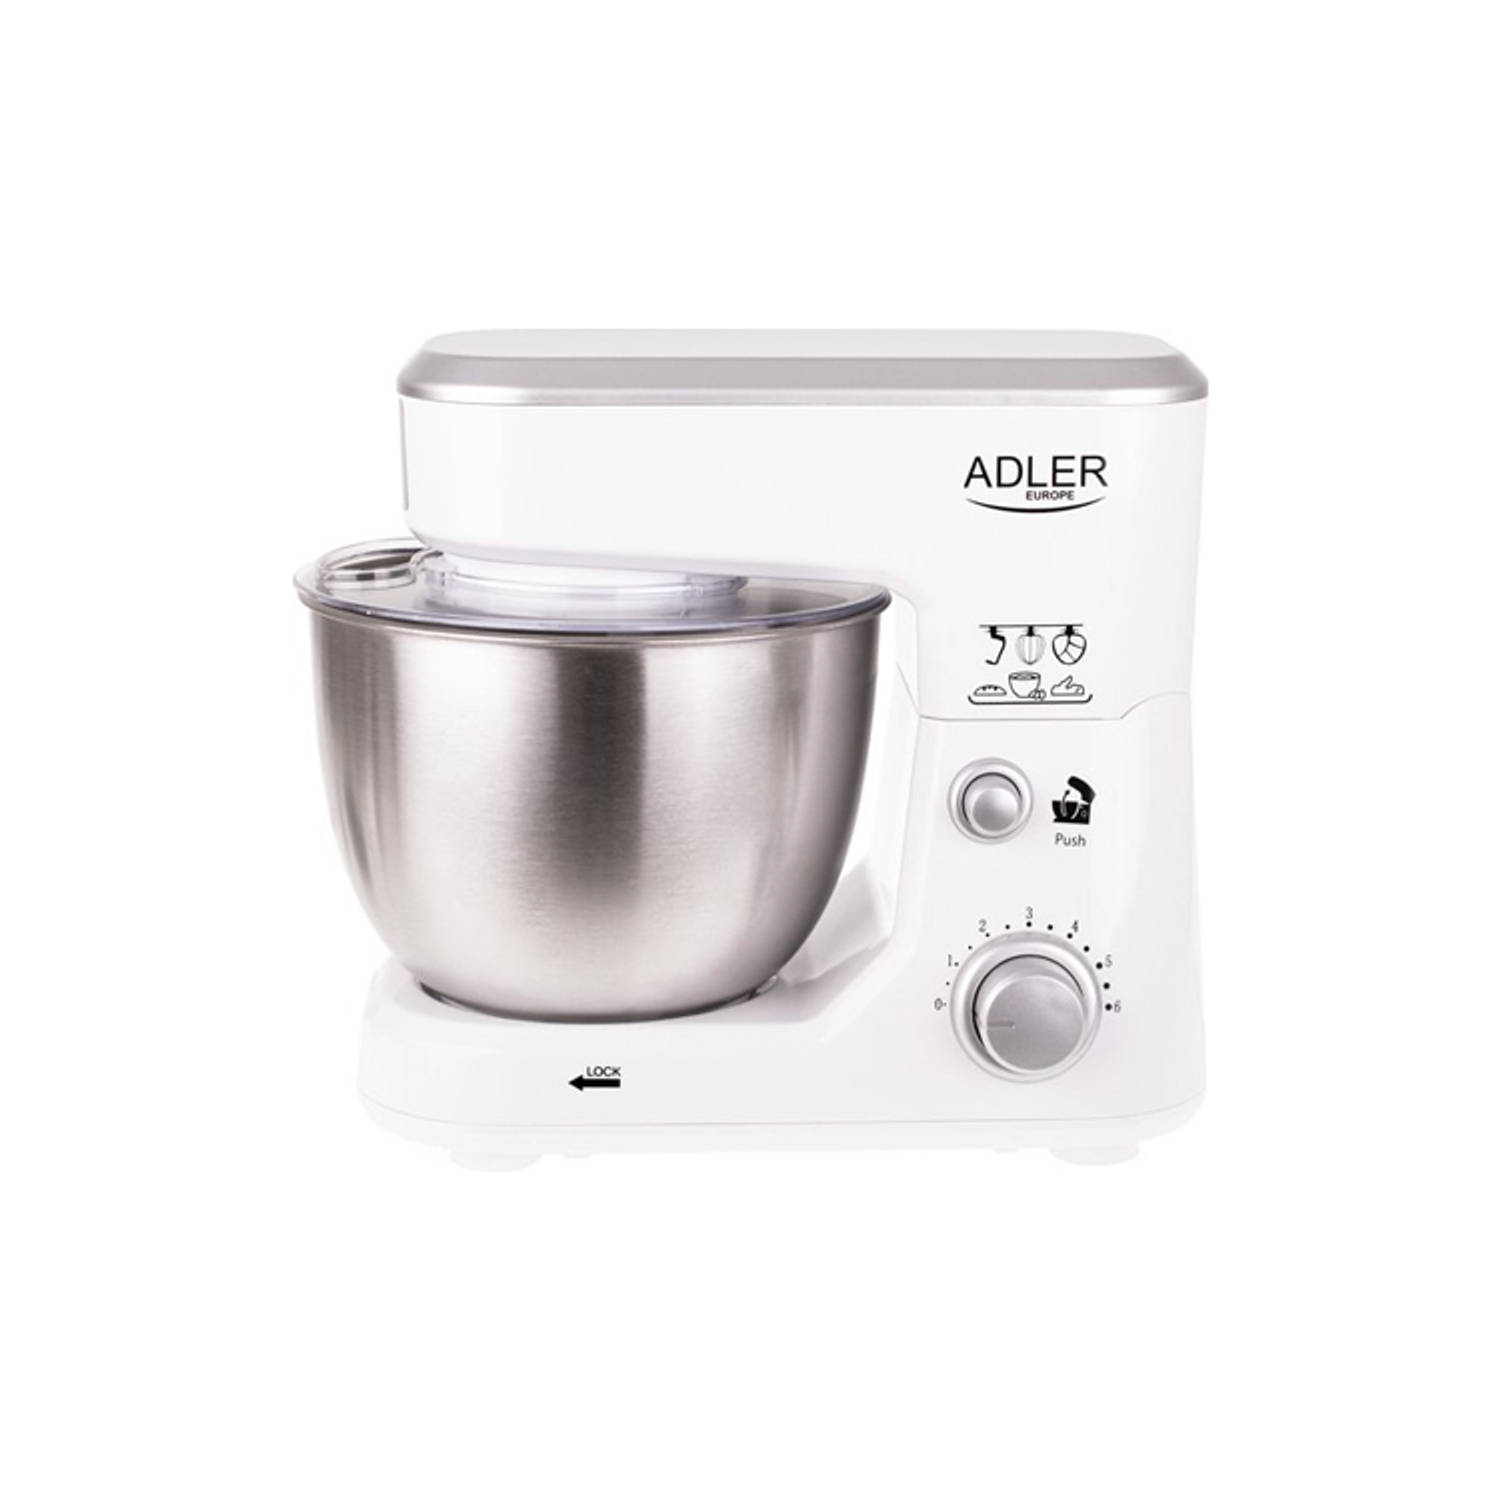 Adler Ad 4216 Foodprocessor Keukenmachine 1000 Watt